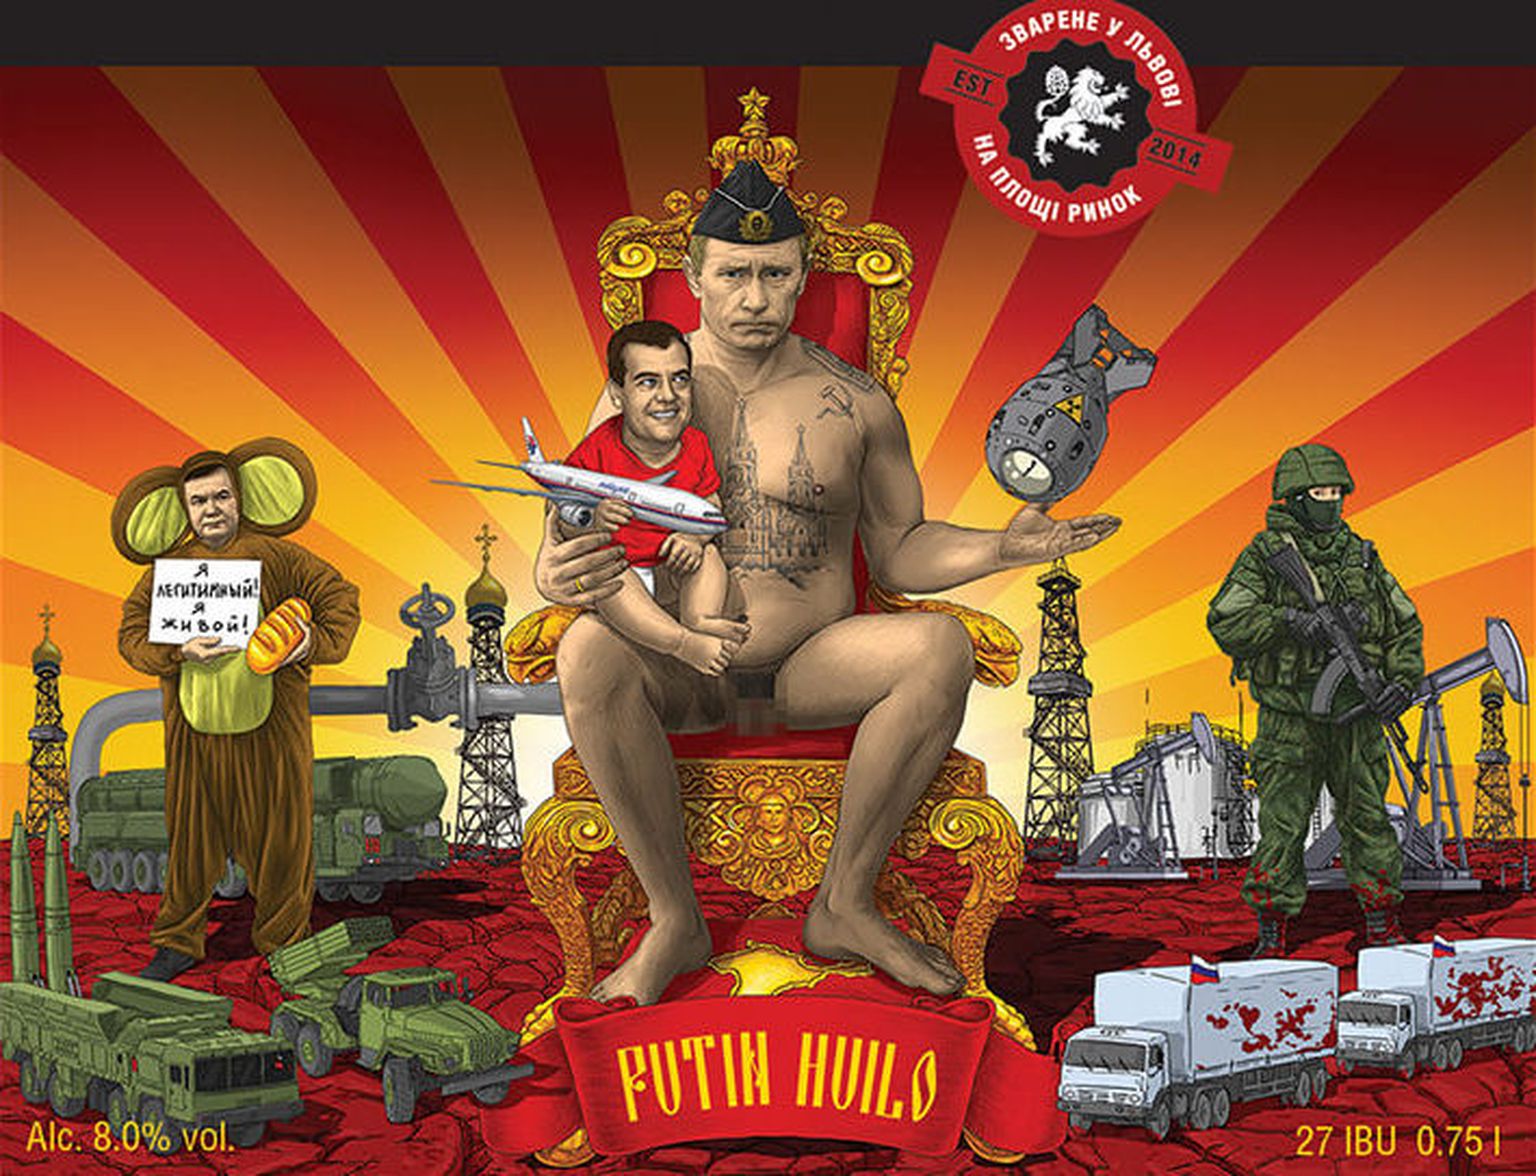 Ukrainas Lvivis villitud õlu "Putin huilo"